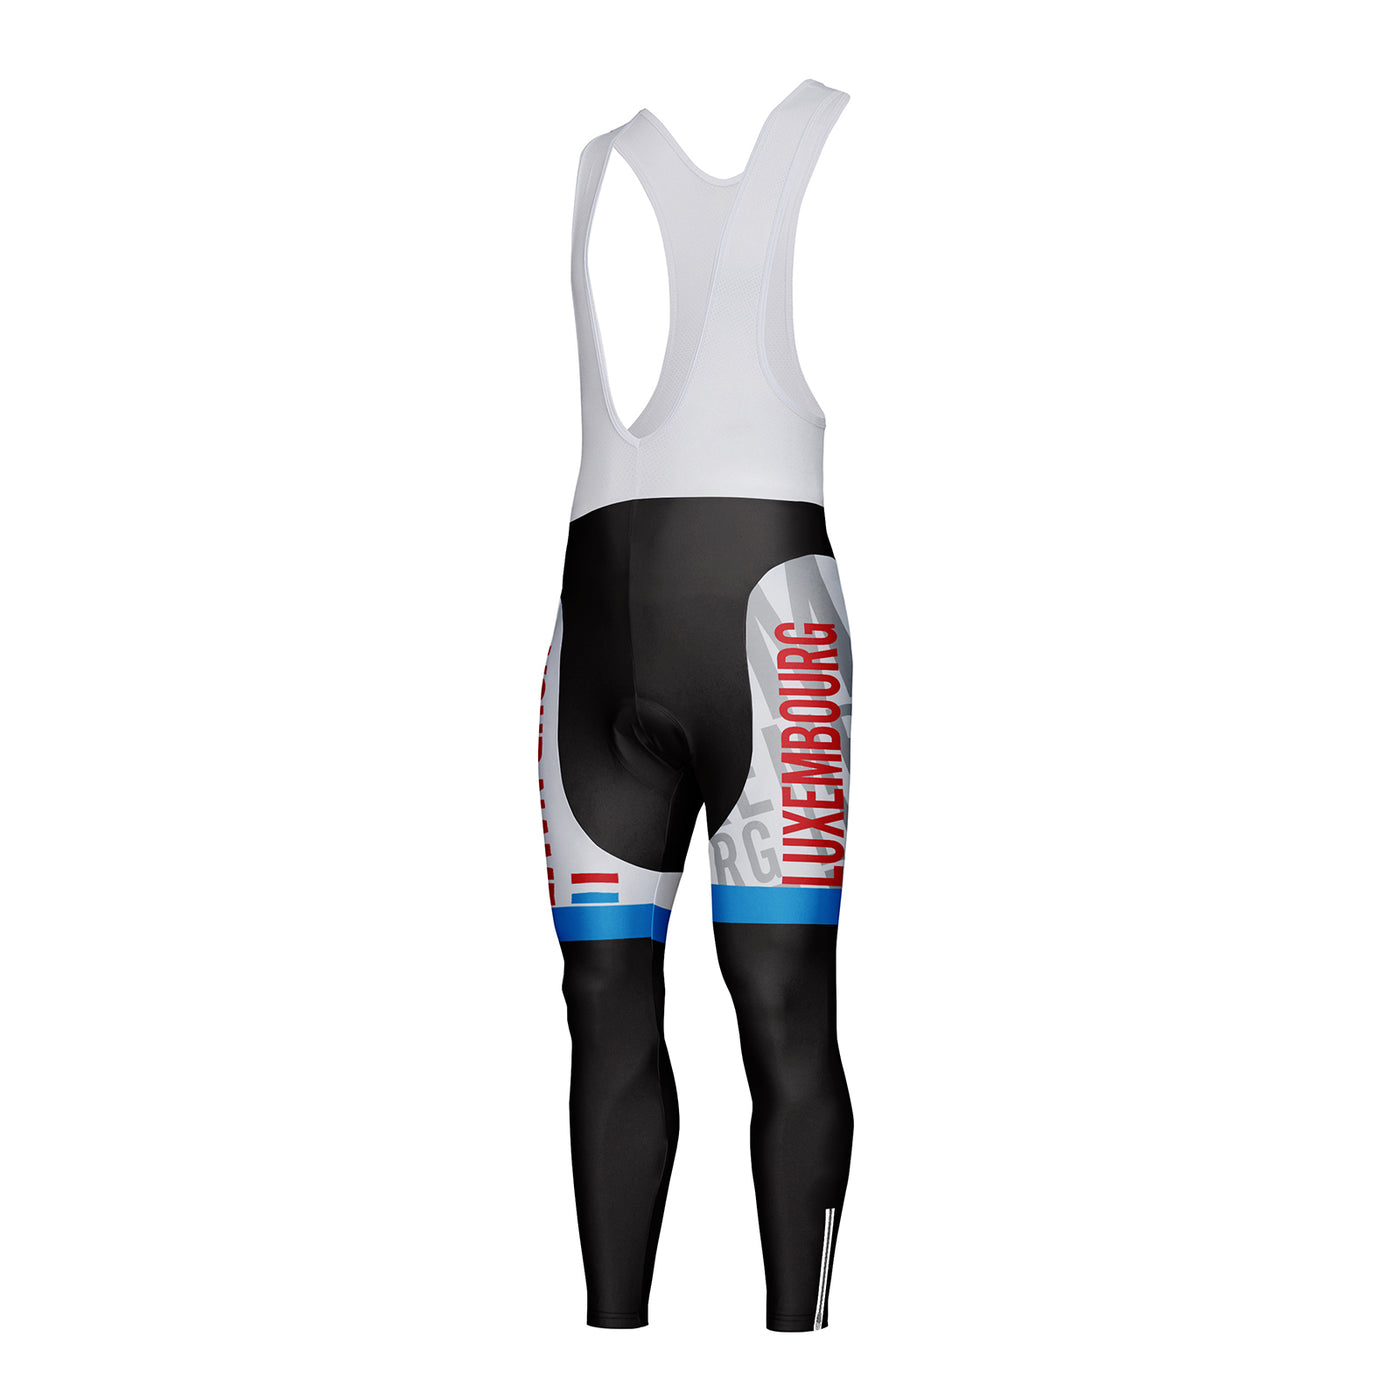 Customized Luxembourg Unisex Cycling Bib Tights Long Pants